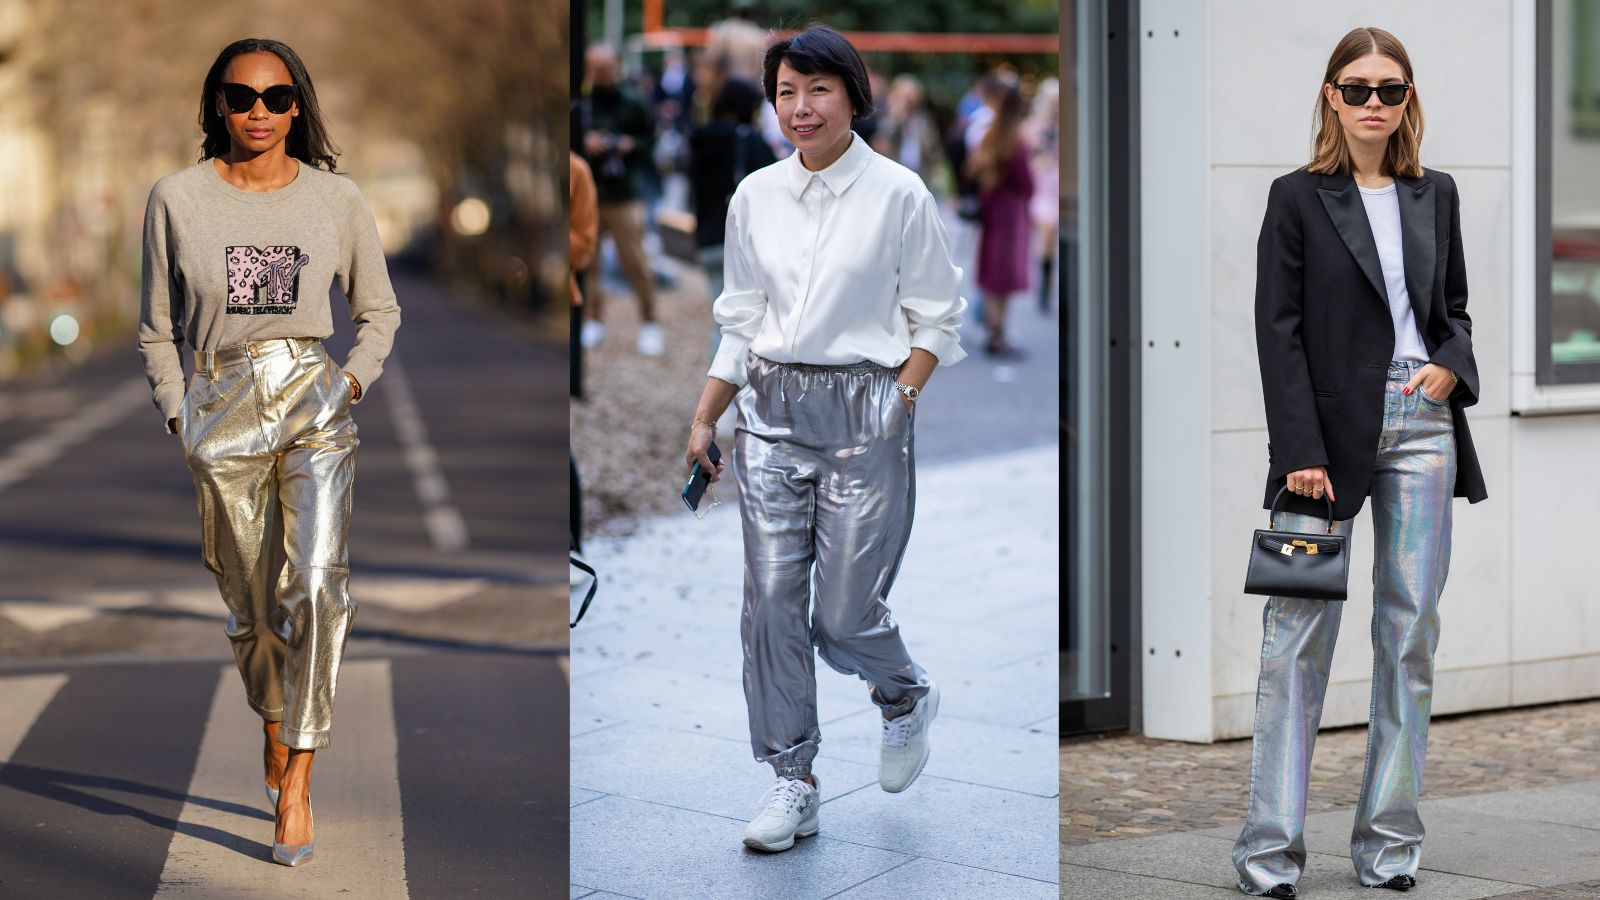 How to wear metallic pants the grown up way